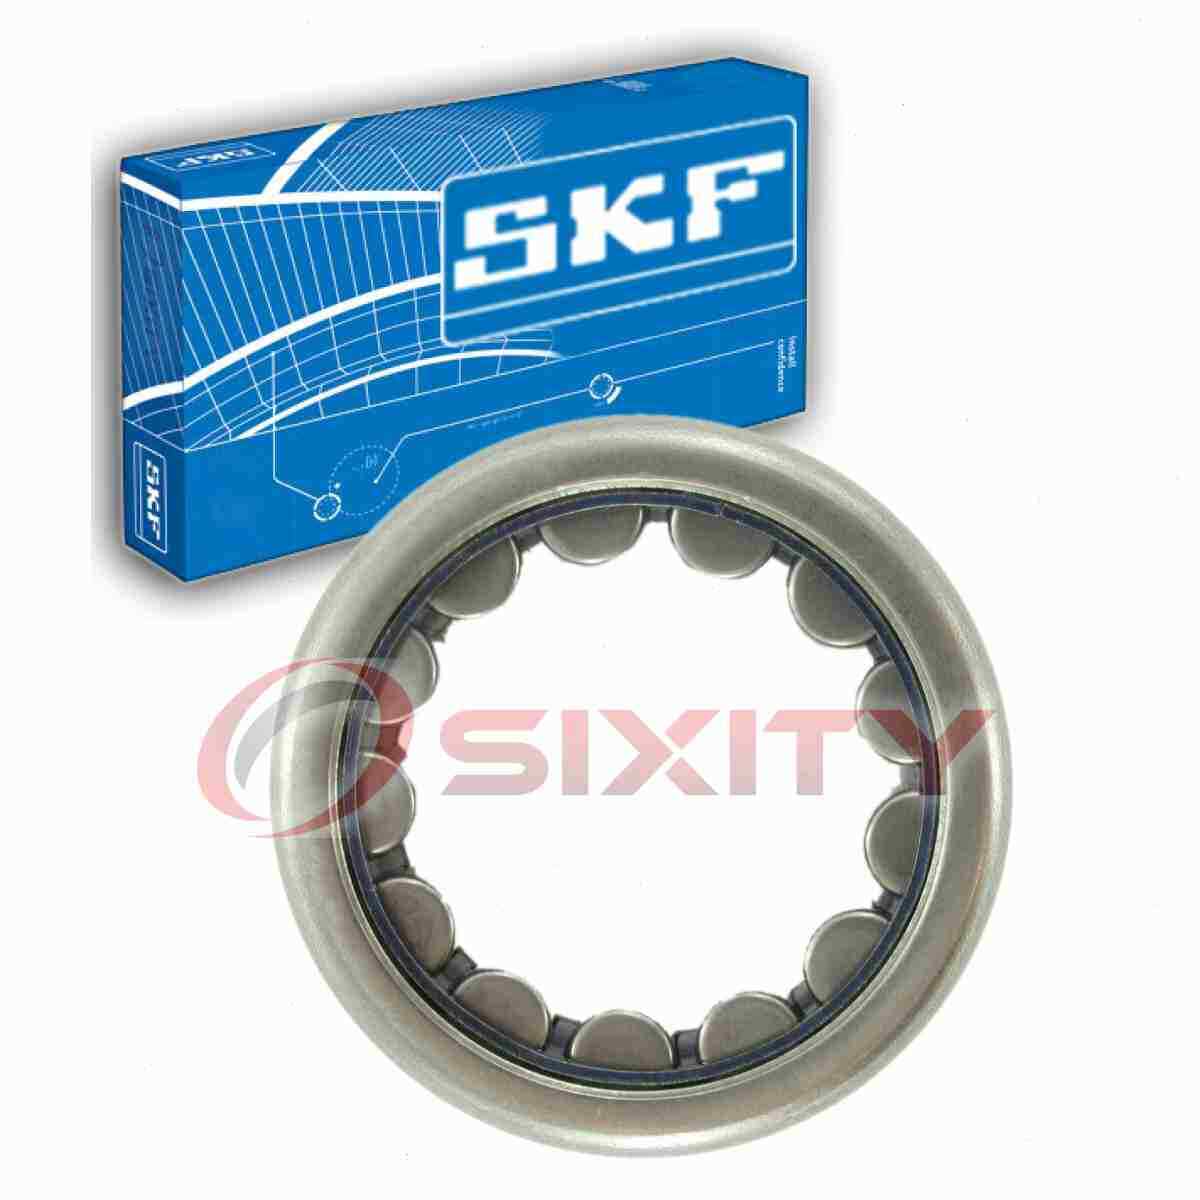 SKF Rear Wheel Bearing for 1975-1987 Oldsmobile Cutlass Axle Drivetrain bk